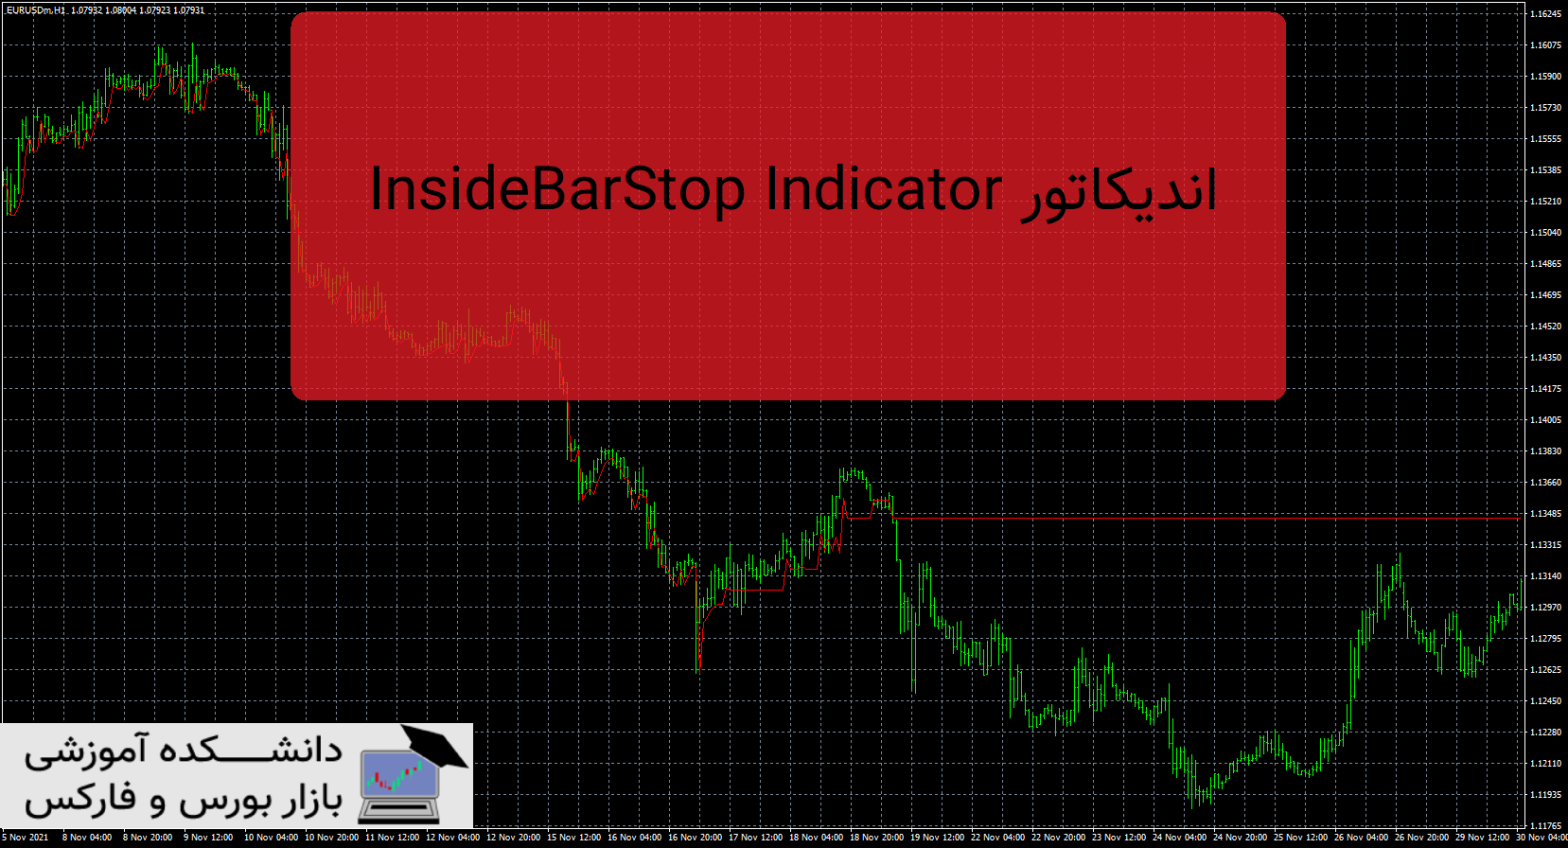 InsideBarStop Indicator دانلود و معرفی اندیکاتور